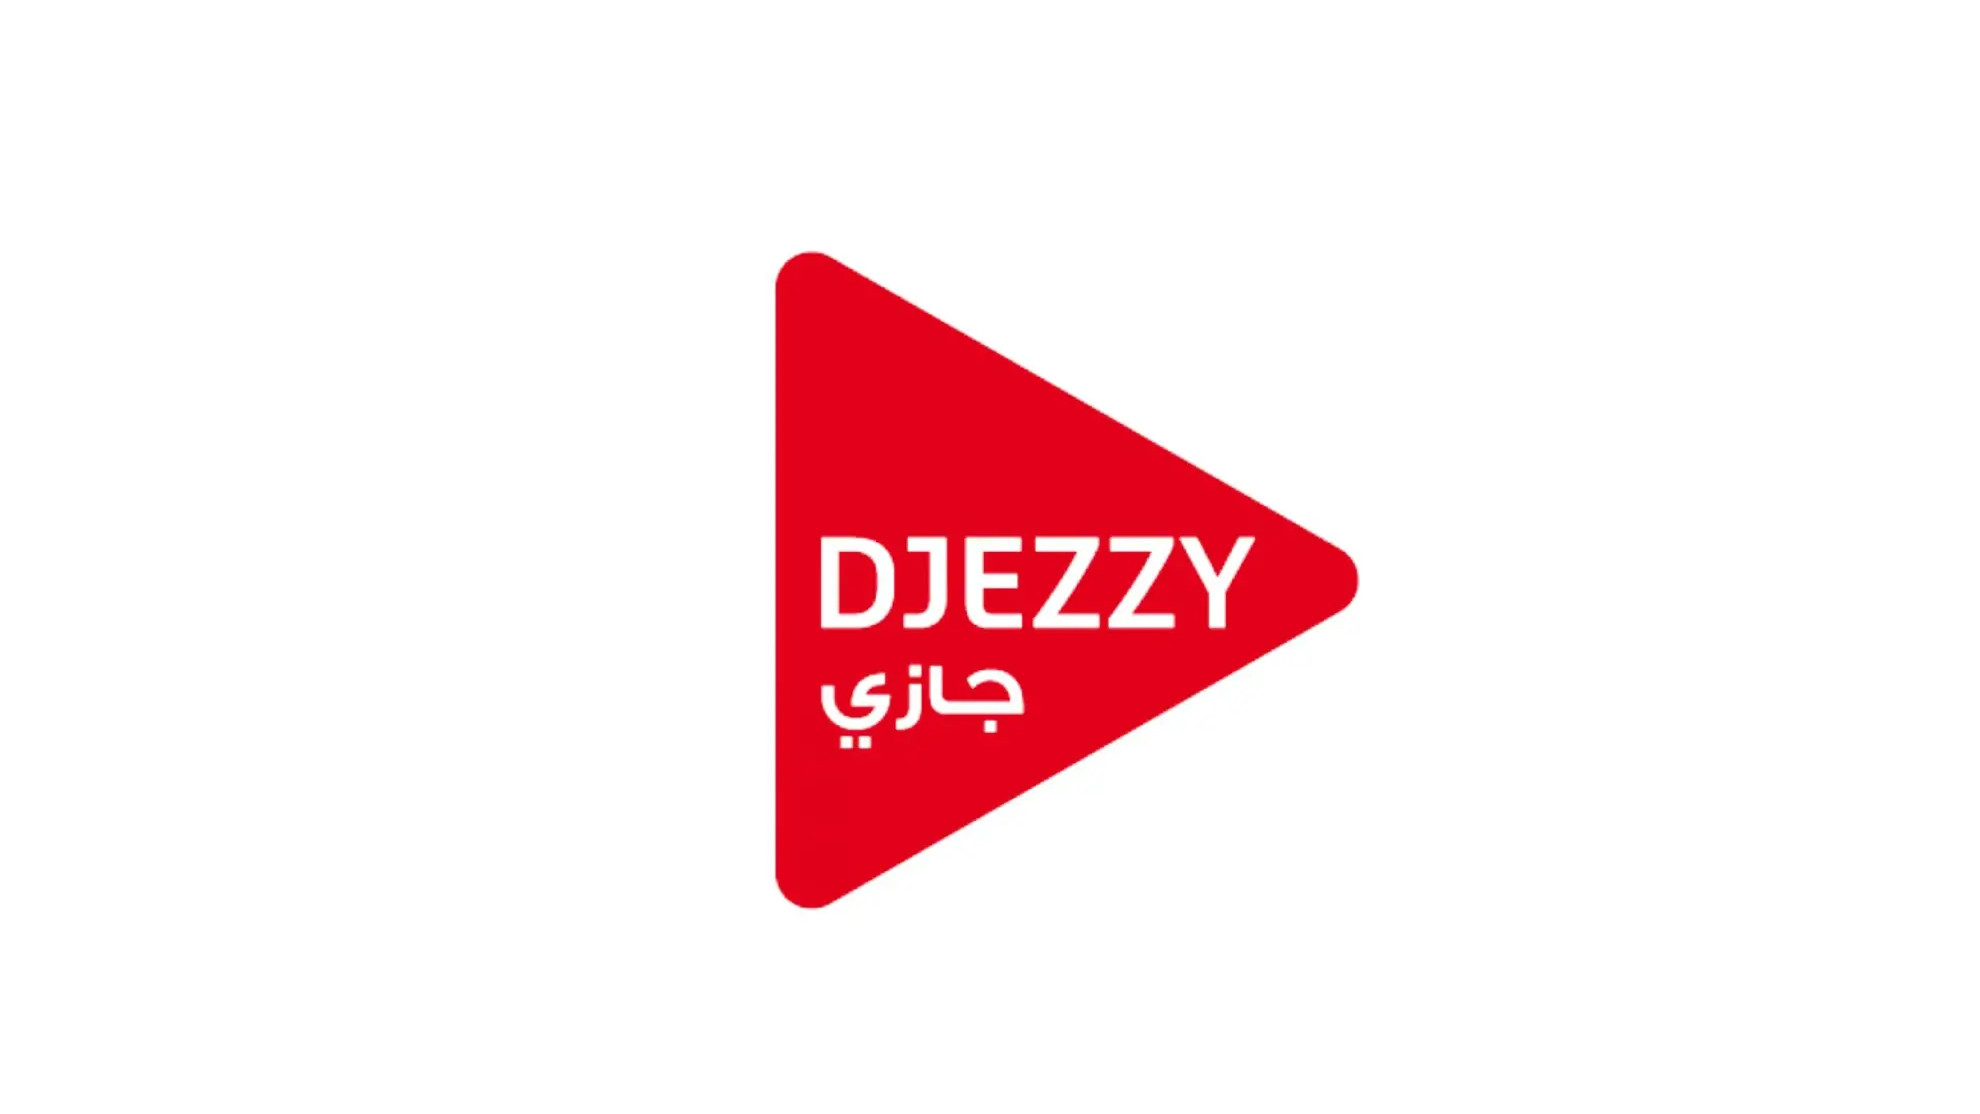 Djezzy 100 DZD Mobile Top-up DZ 1.36$